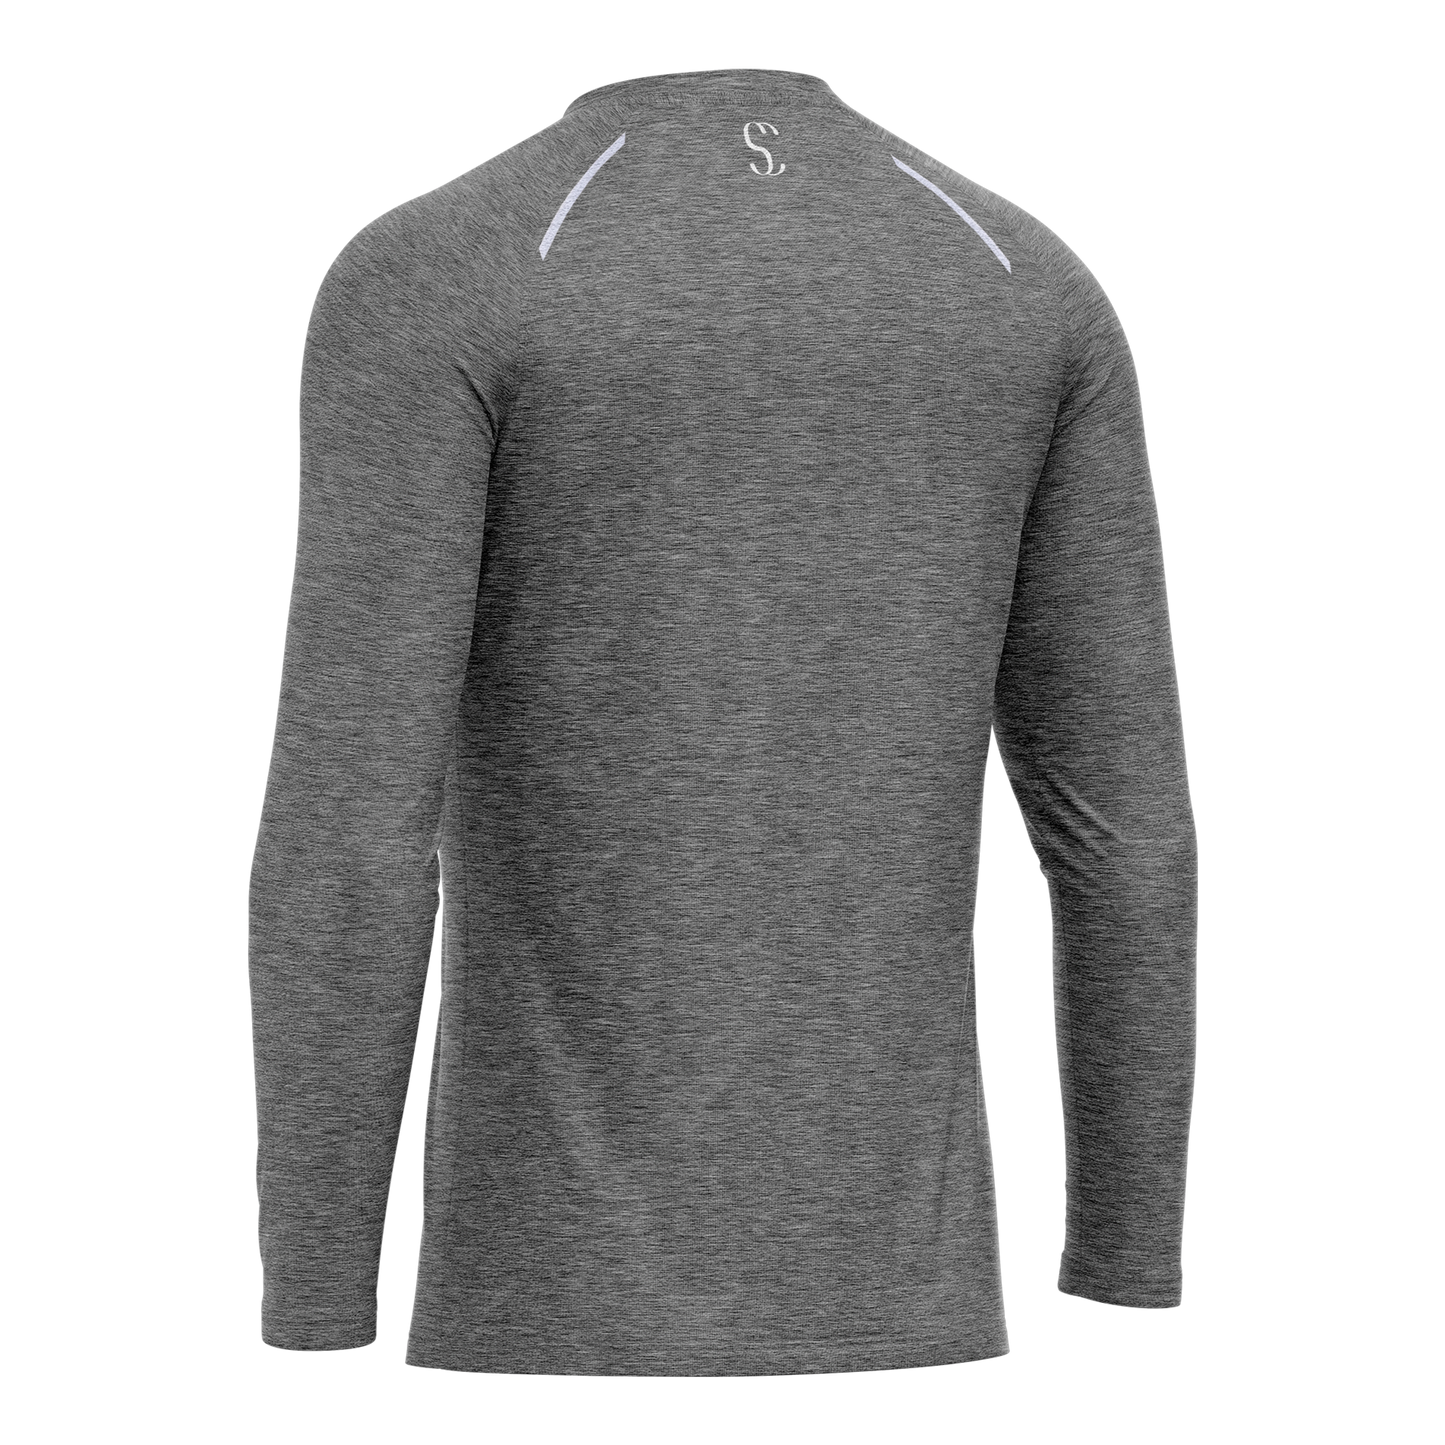 Men's Grey Long Sleeve Thermal T-Shirt